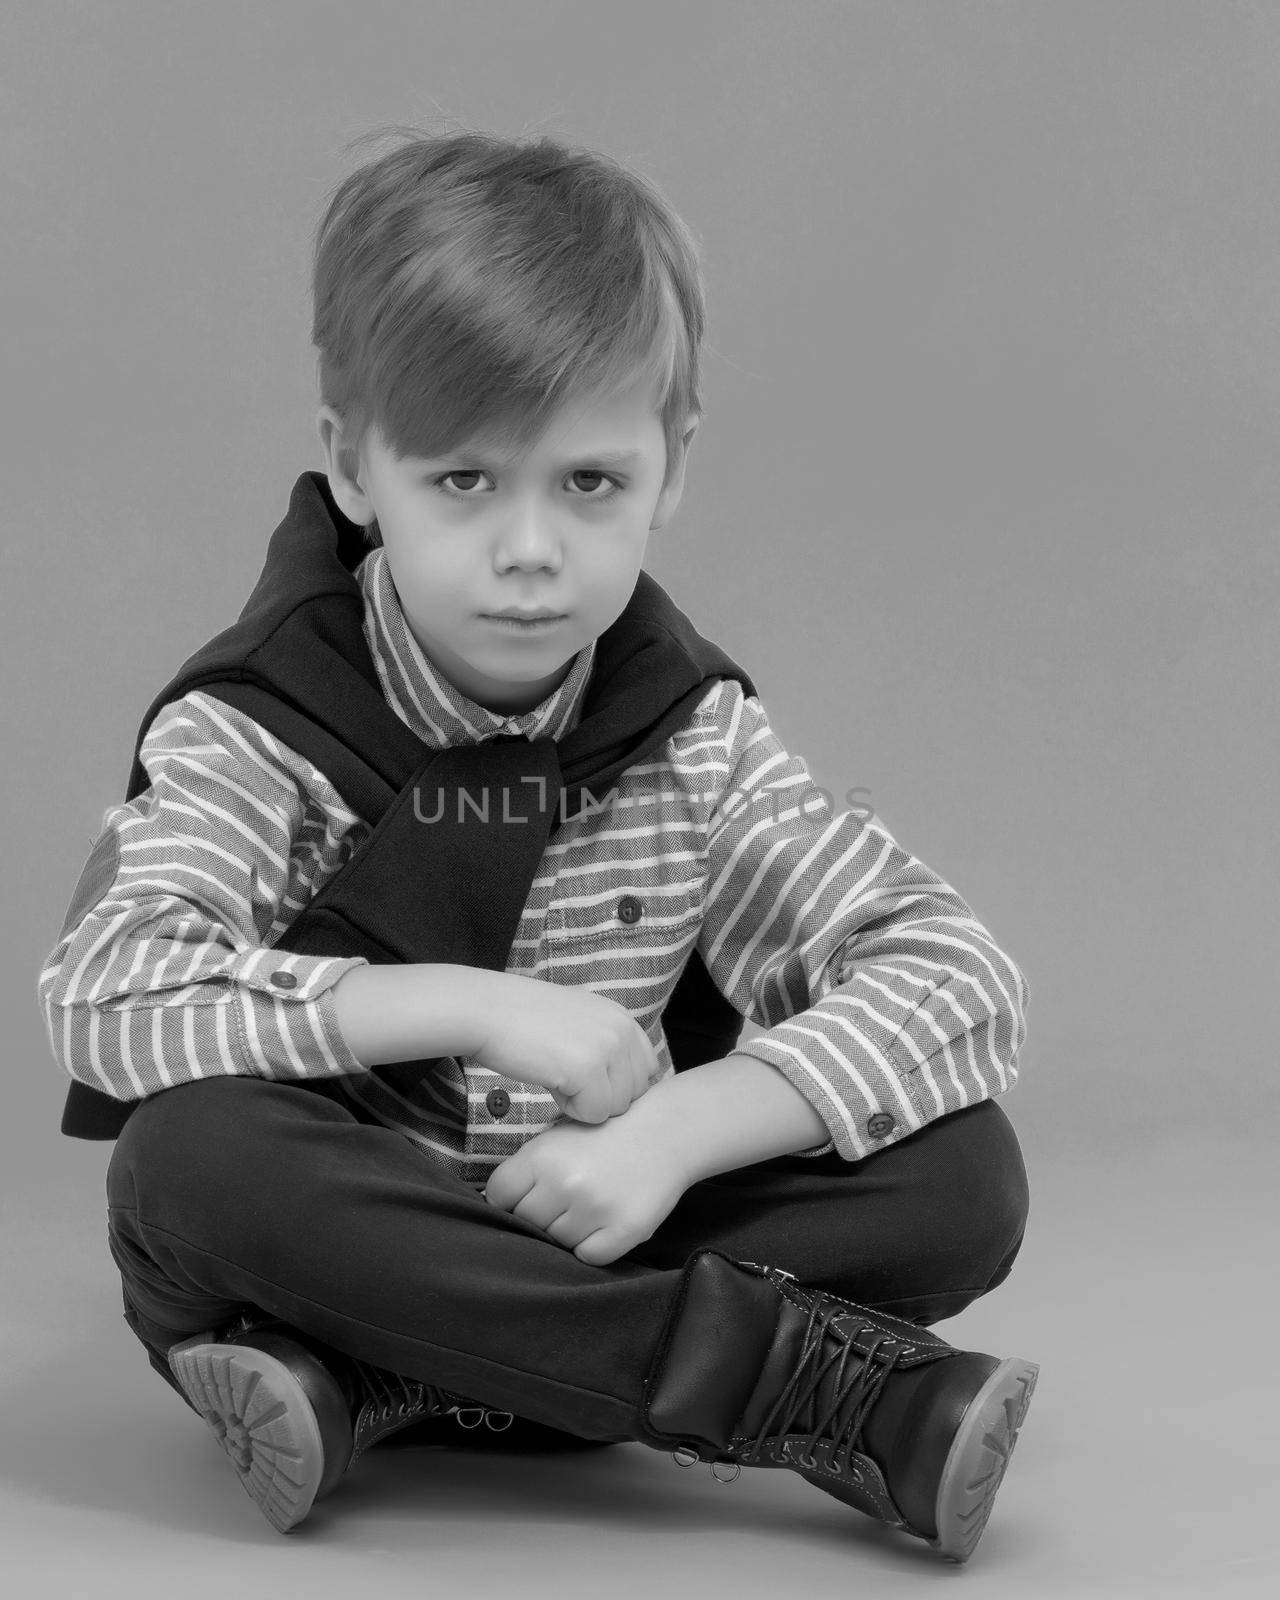 The little boy frowned. by kolesnikov_studio